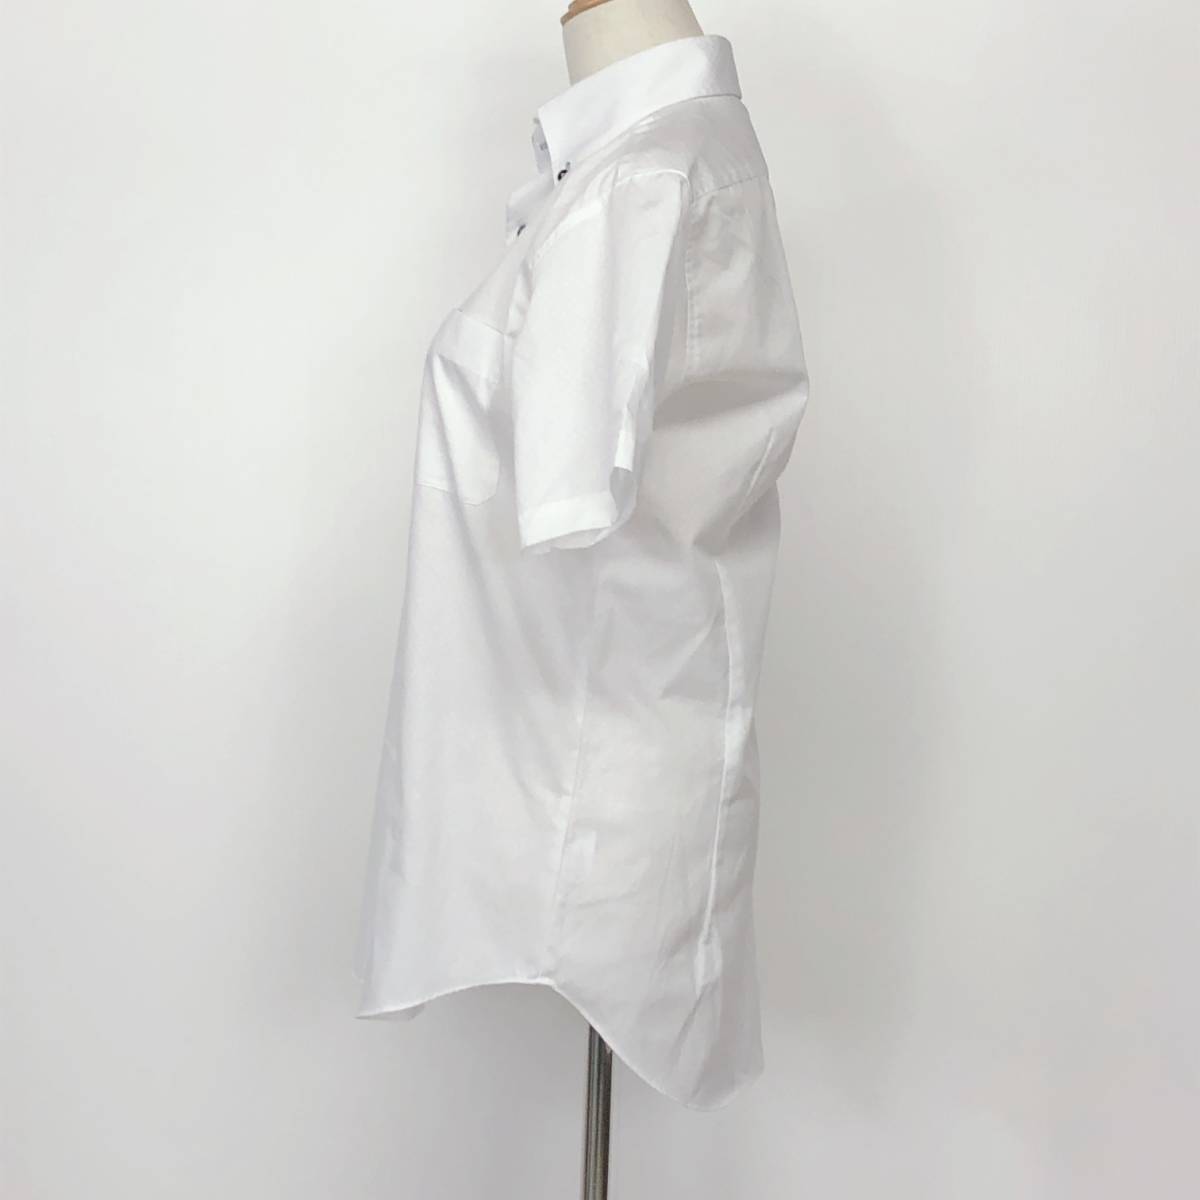 X348 hiromichinakano ヒロミチナカノ メンズ トップス シャツ 半袖 ホワイト 白 綿素材含 シンプル 上品 オフィススタイリッシュルックの画像2